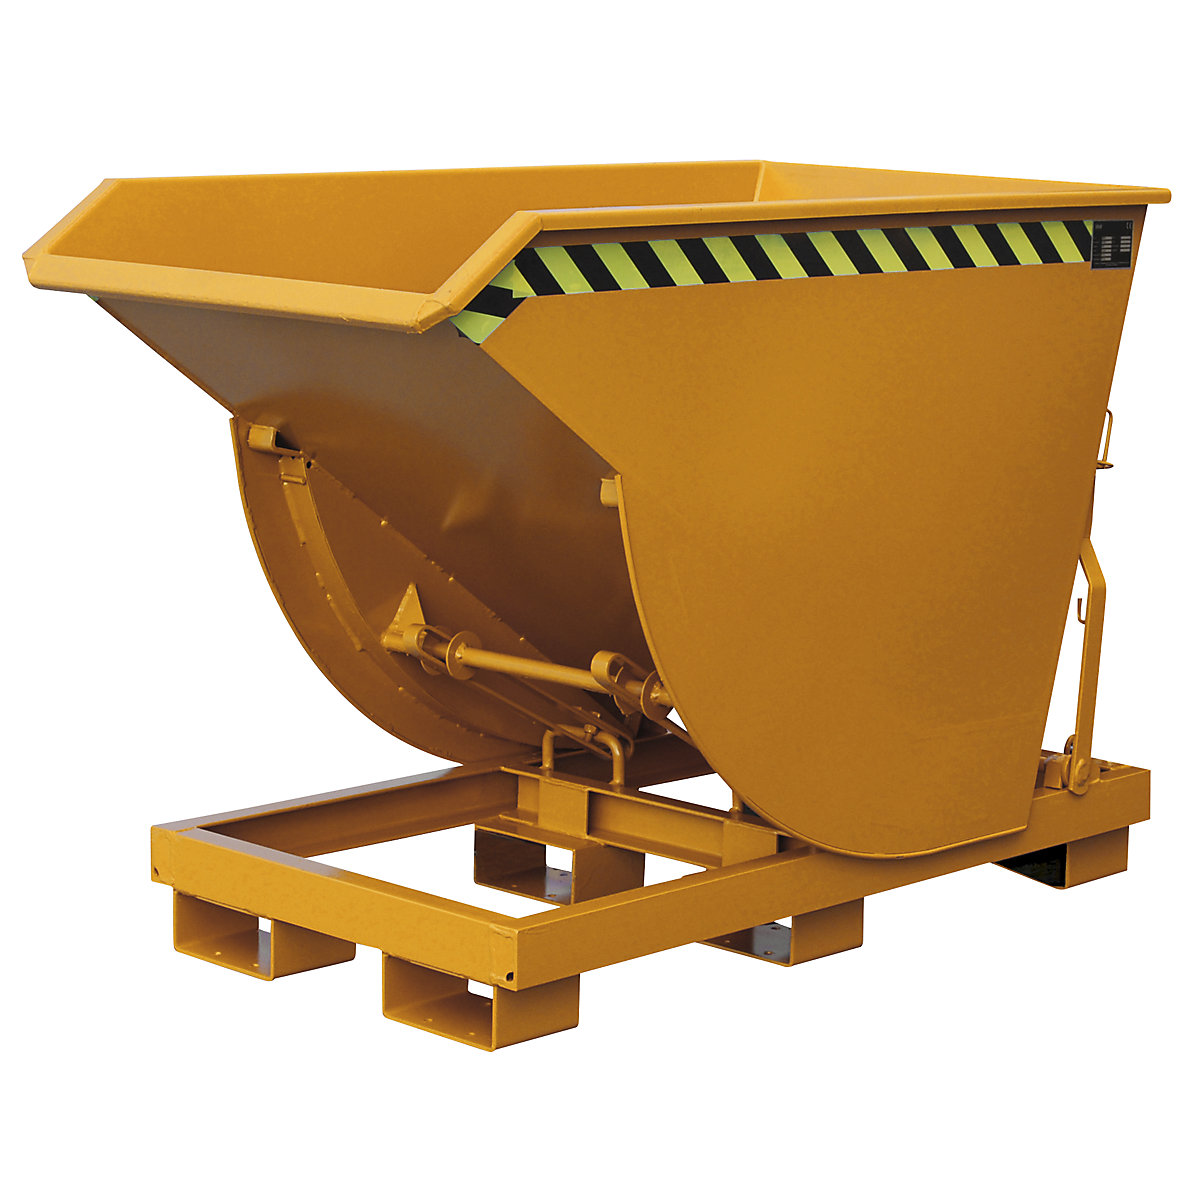 Volquete, modelo estrecho – eurokraft pro, capacidad 0,5 m³, carga máx. 2500 kg, amarillo naranja RAL 2000-10